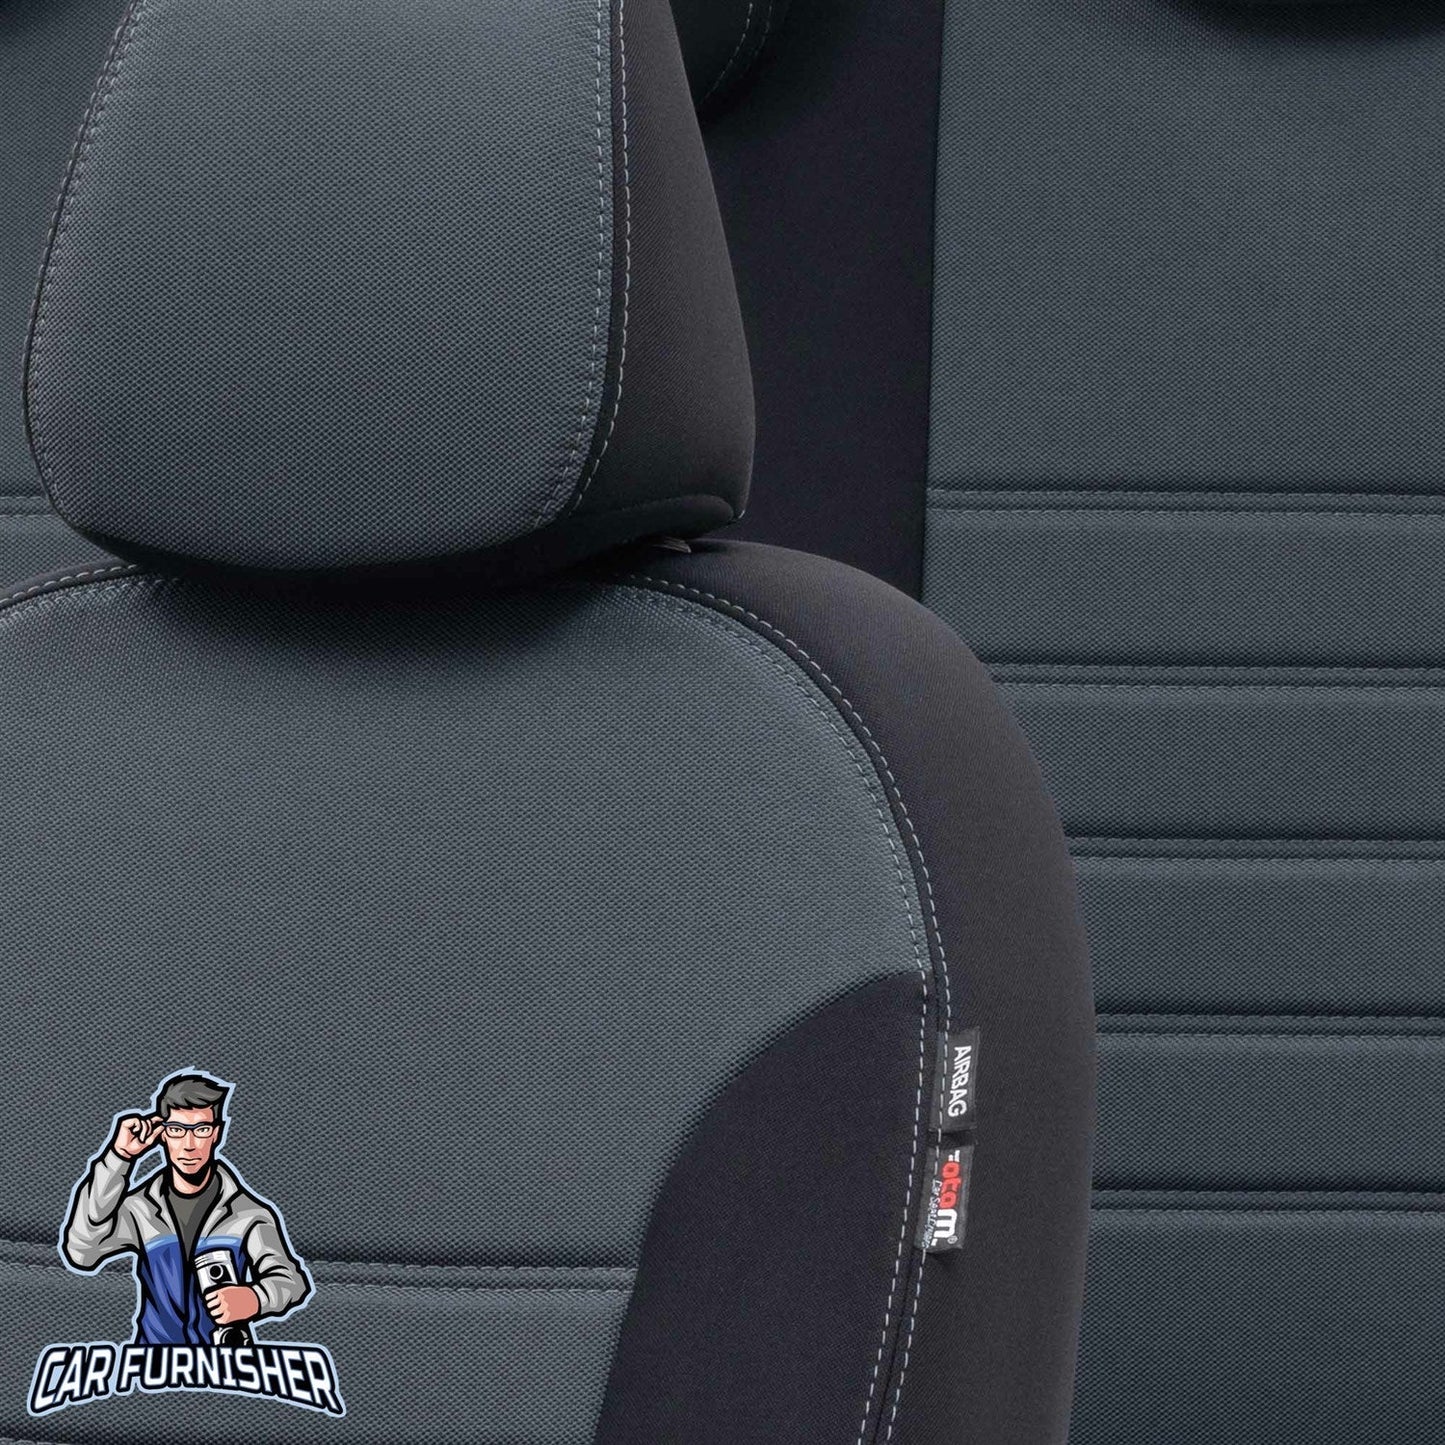 Ford Fiesta Seat Covers Original Jacquard Design Smoked Black Jacquard Fabric